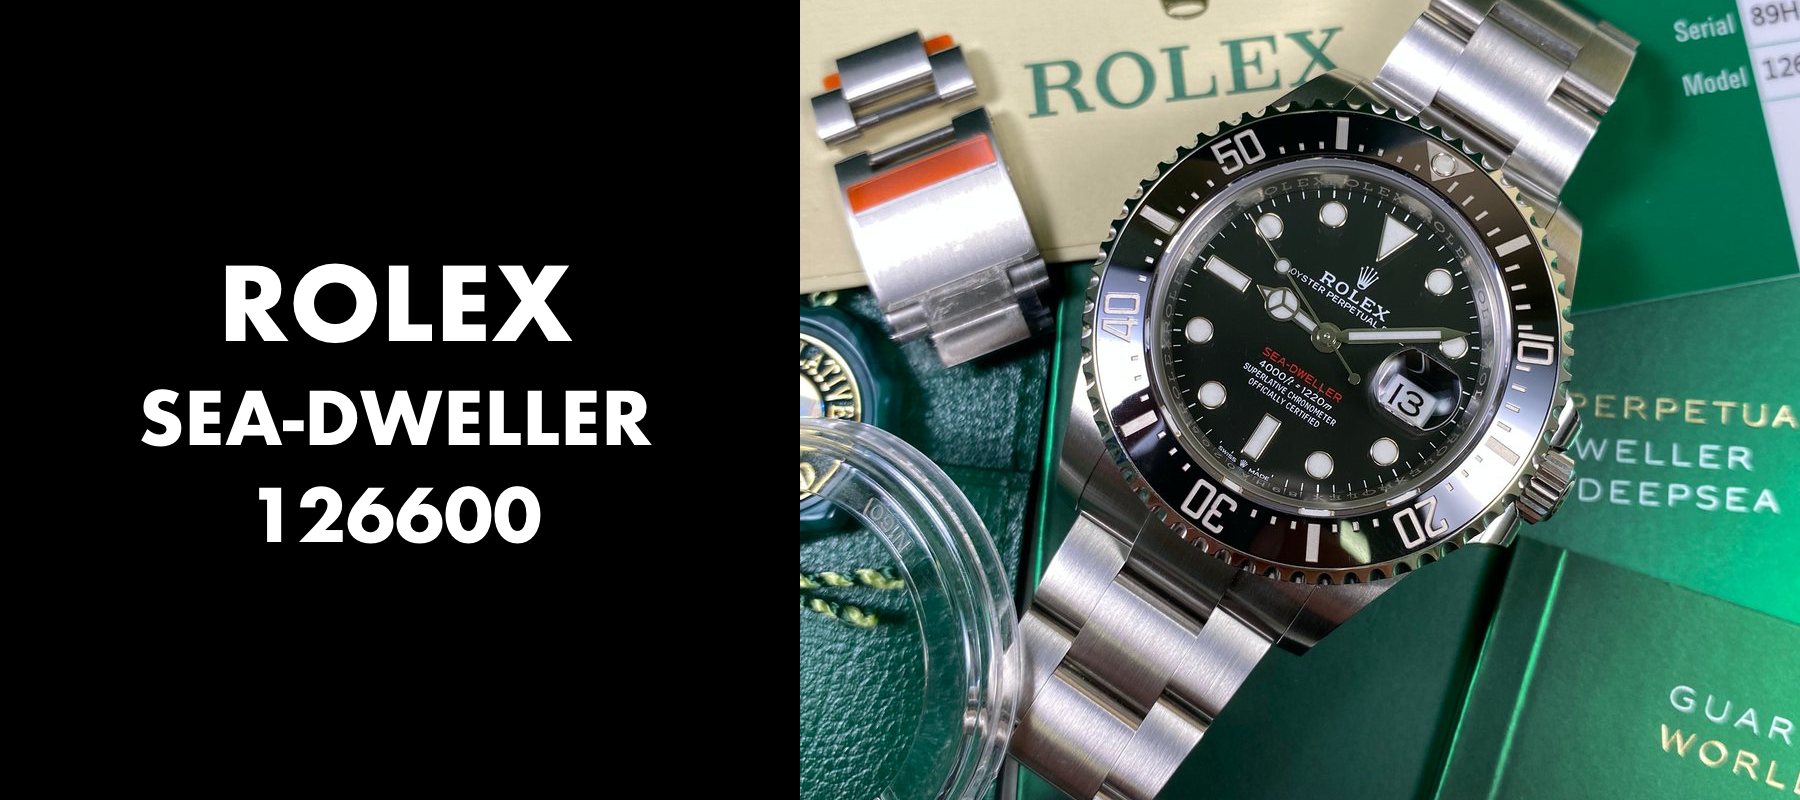 Rolex Sea-Dweller 126600 SD43 - History